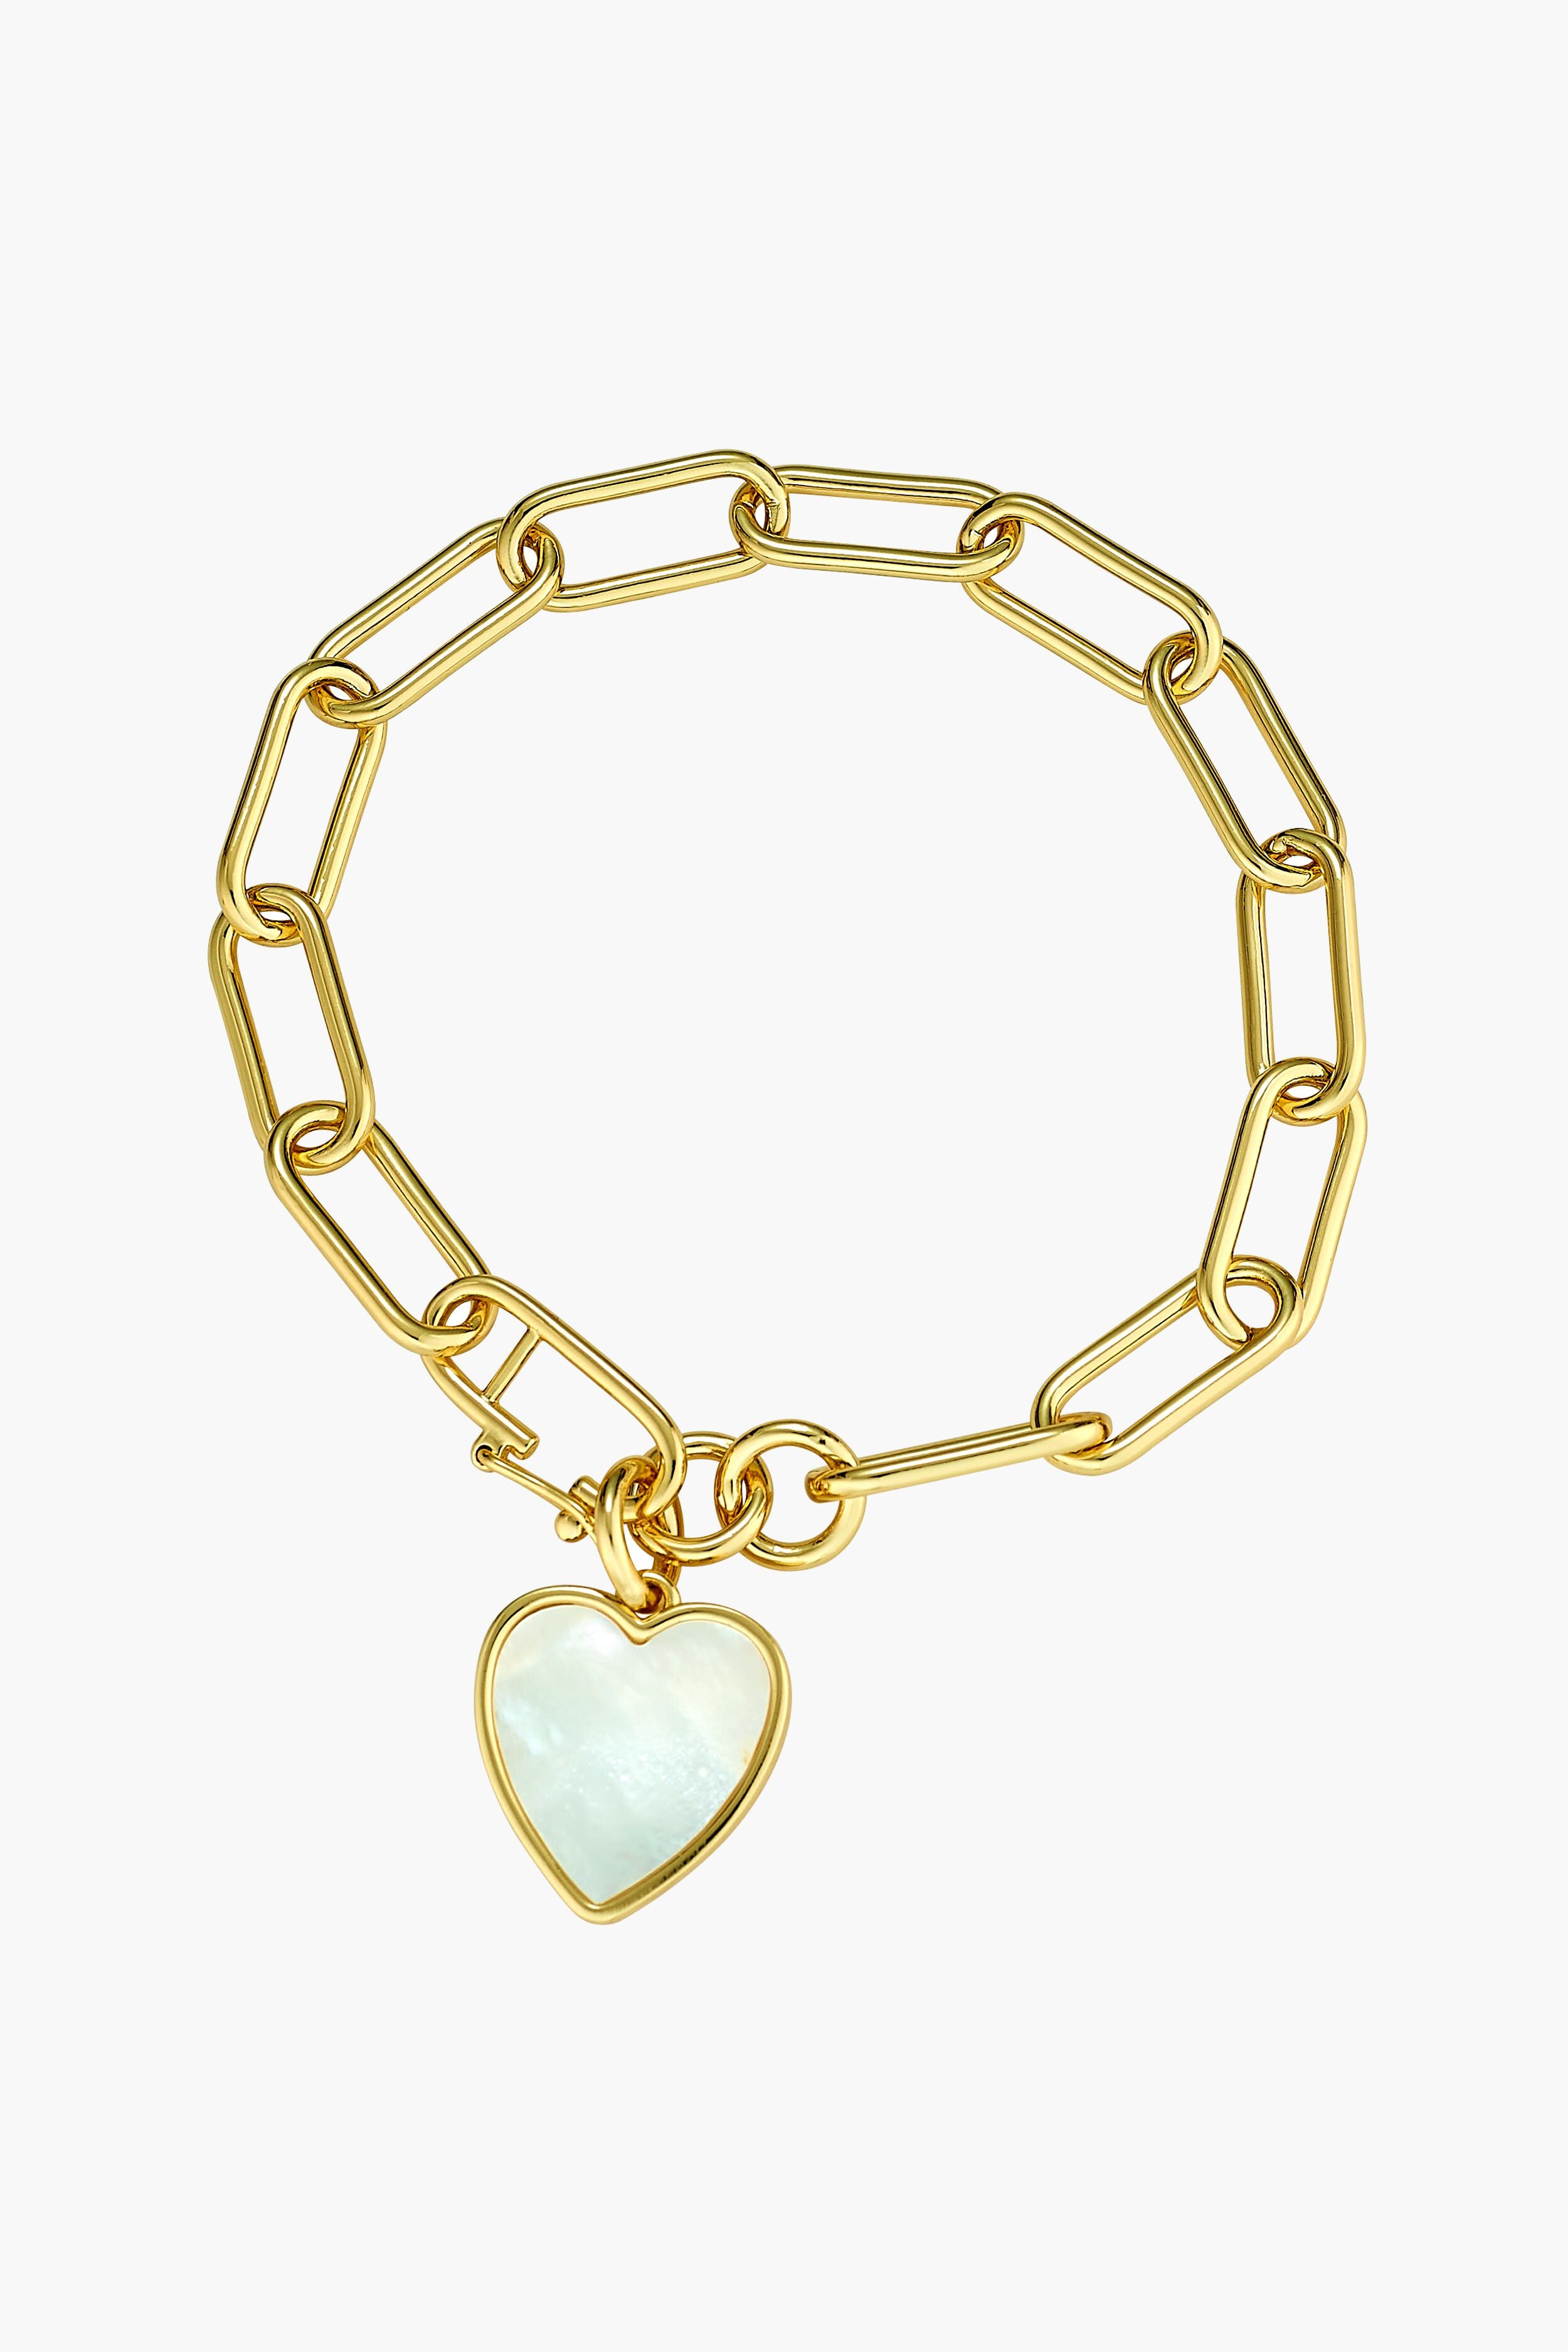 DIAMOND HEART BRACELET | Delicate gold bracelet, Gold bracelet for girl, Gold  bracelet simple